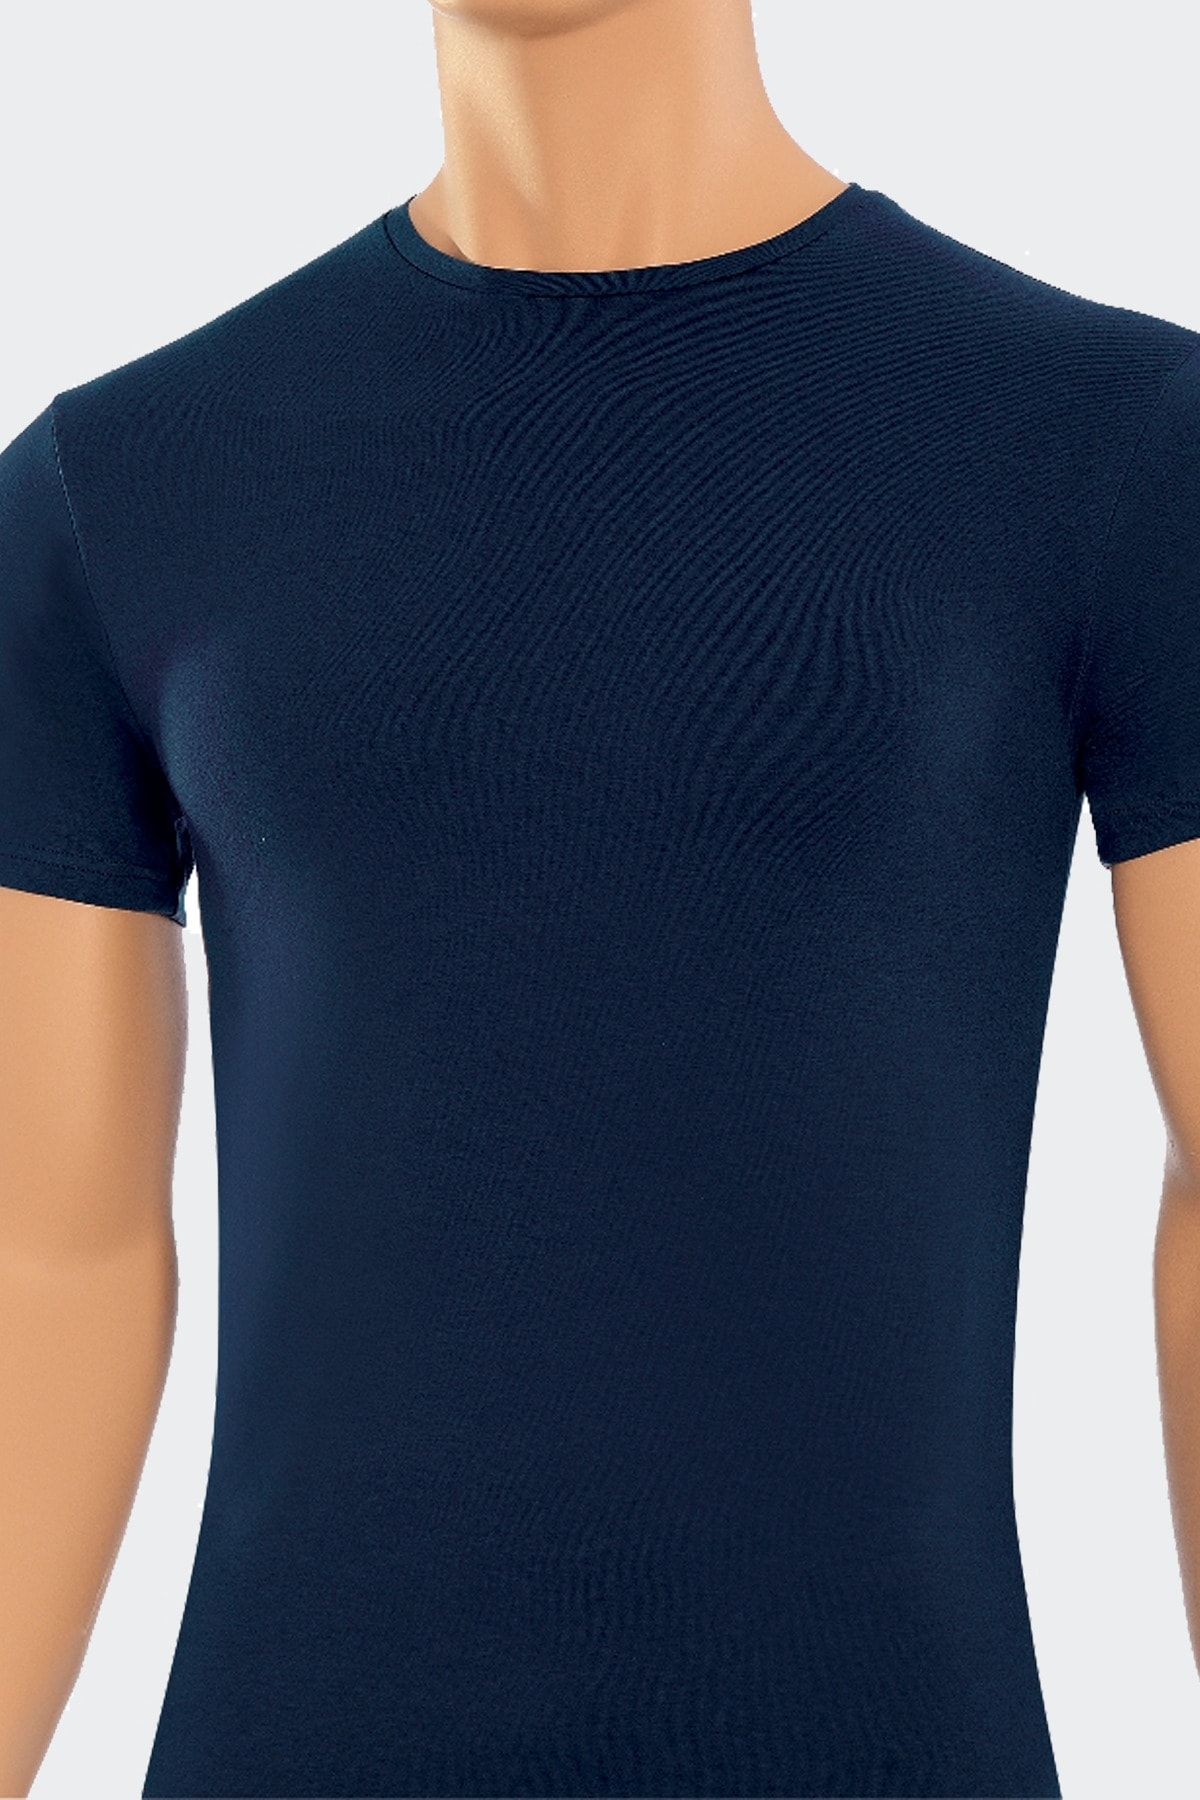 Öts 2'li Erkek Modal Kapalı Yaka T-shirt Lacivert